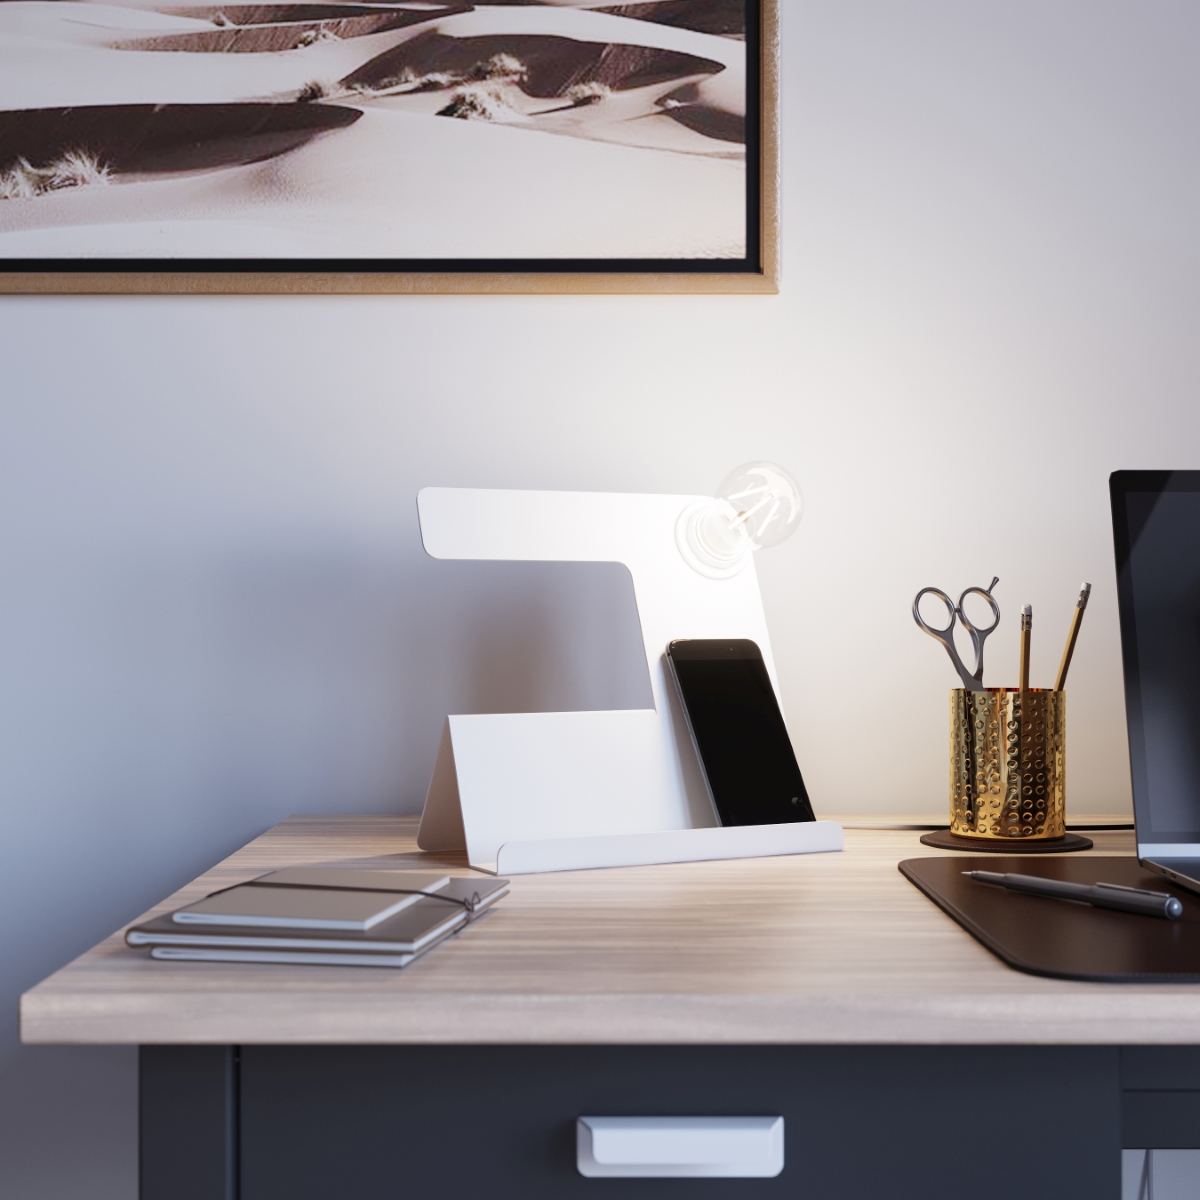 Lampa biurkowa INCLINE biała Sollux nowoczesna biała lampka z miejscem na smartfona albo tablet